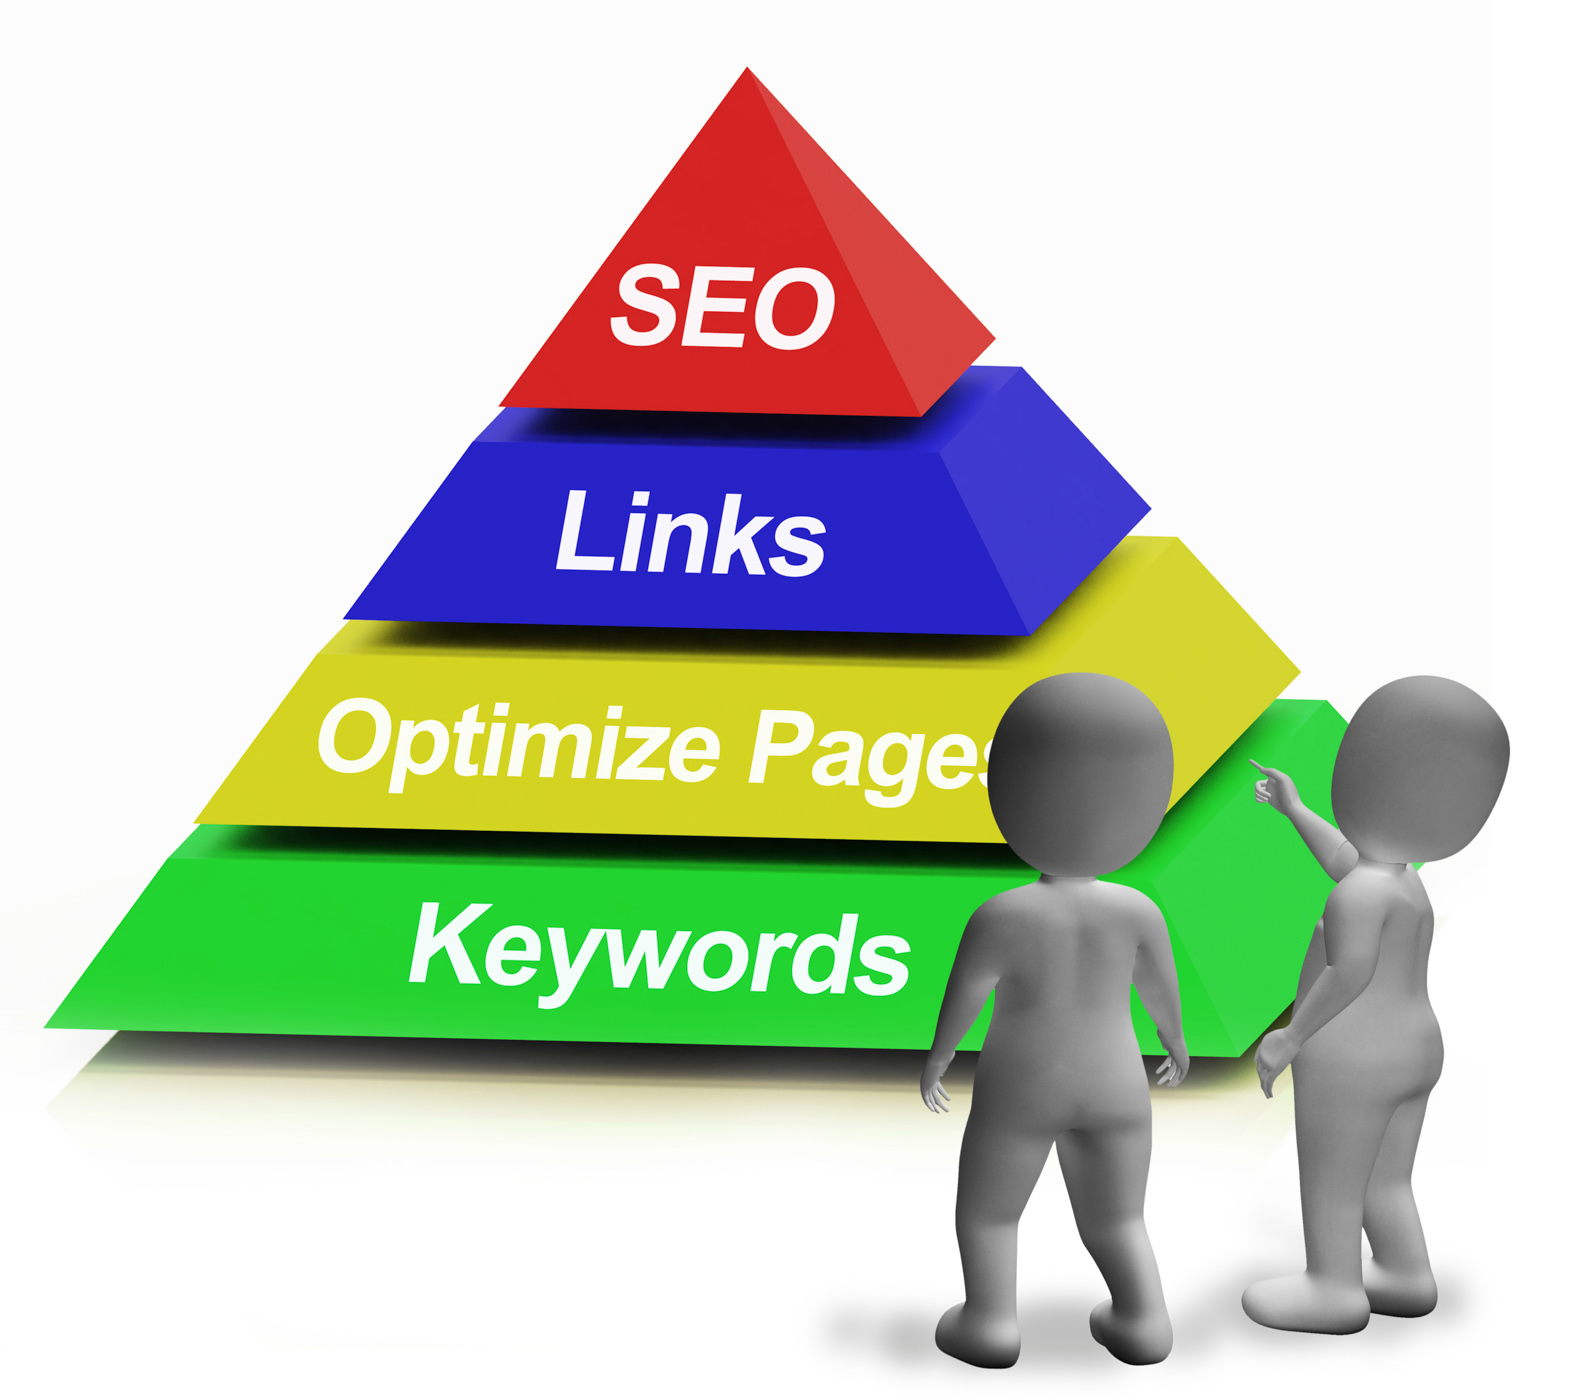 Seo pyramid showing the use of keywords links and optimizing photo